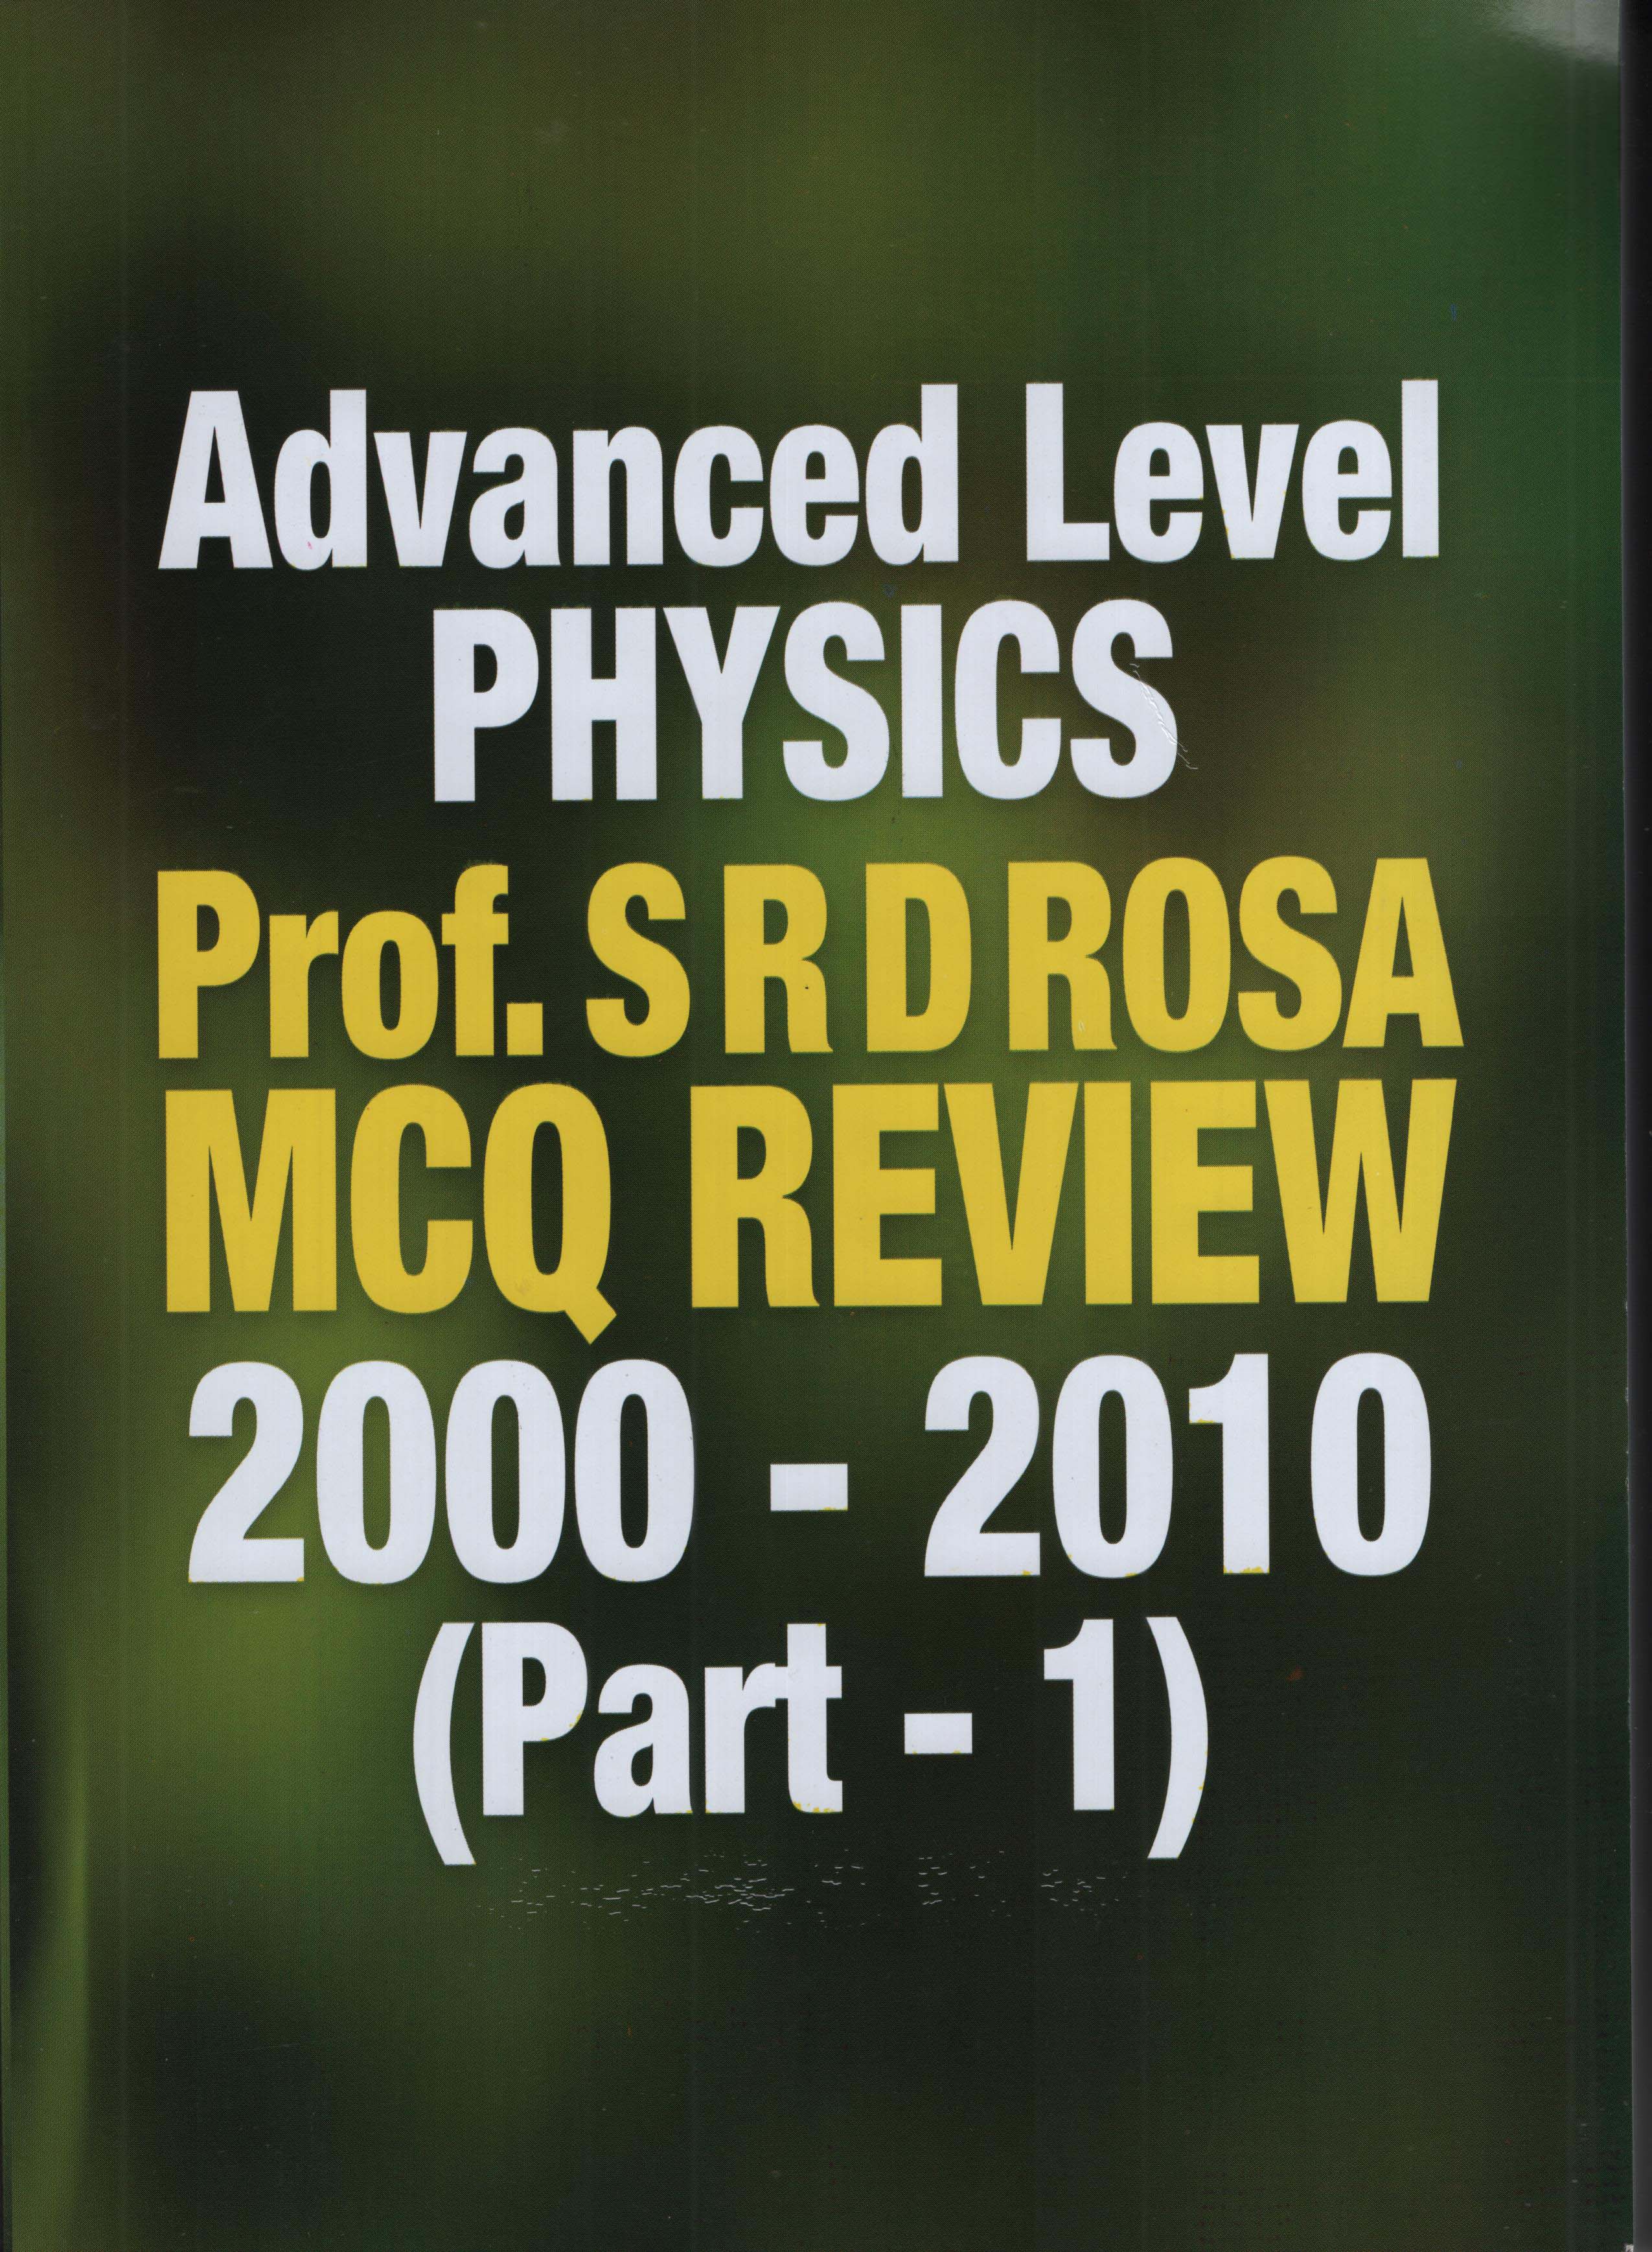 Advanced Level Physics MCQ Review 2000-2010 (Part -1)